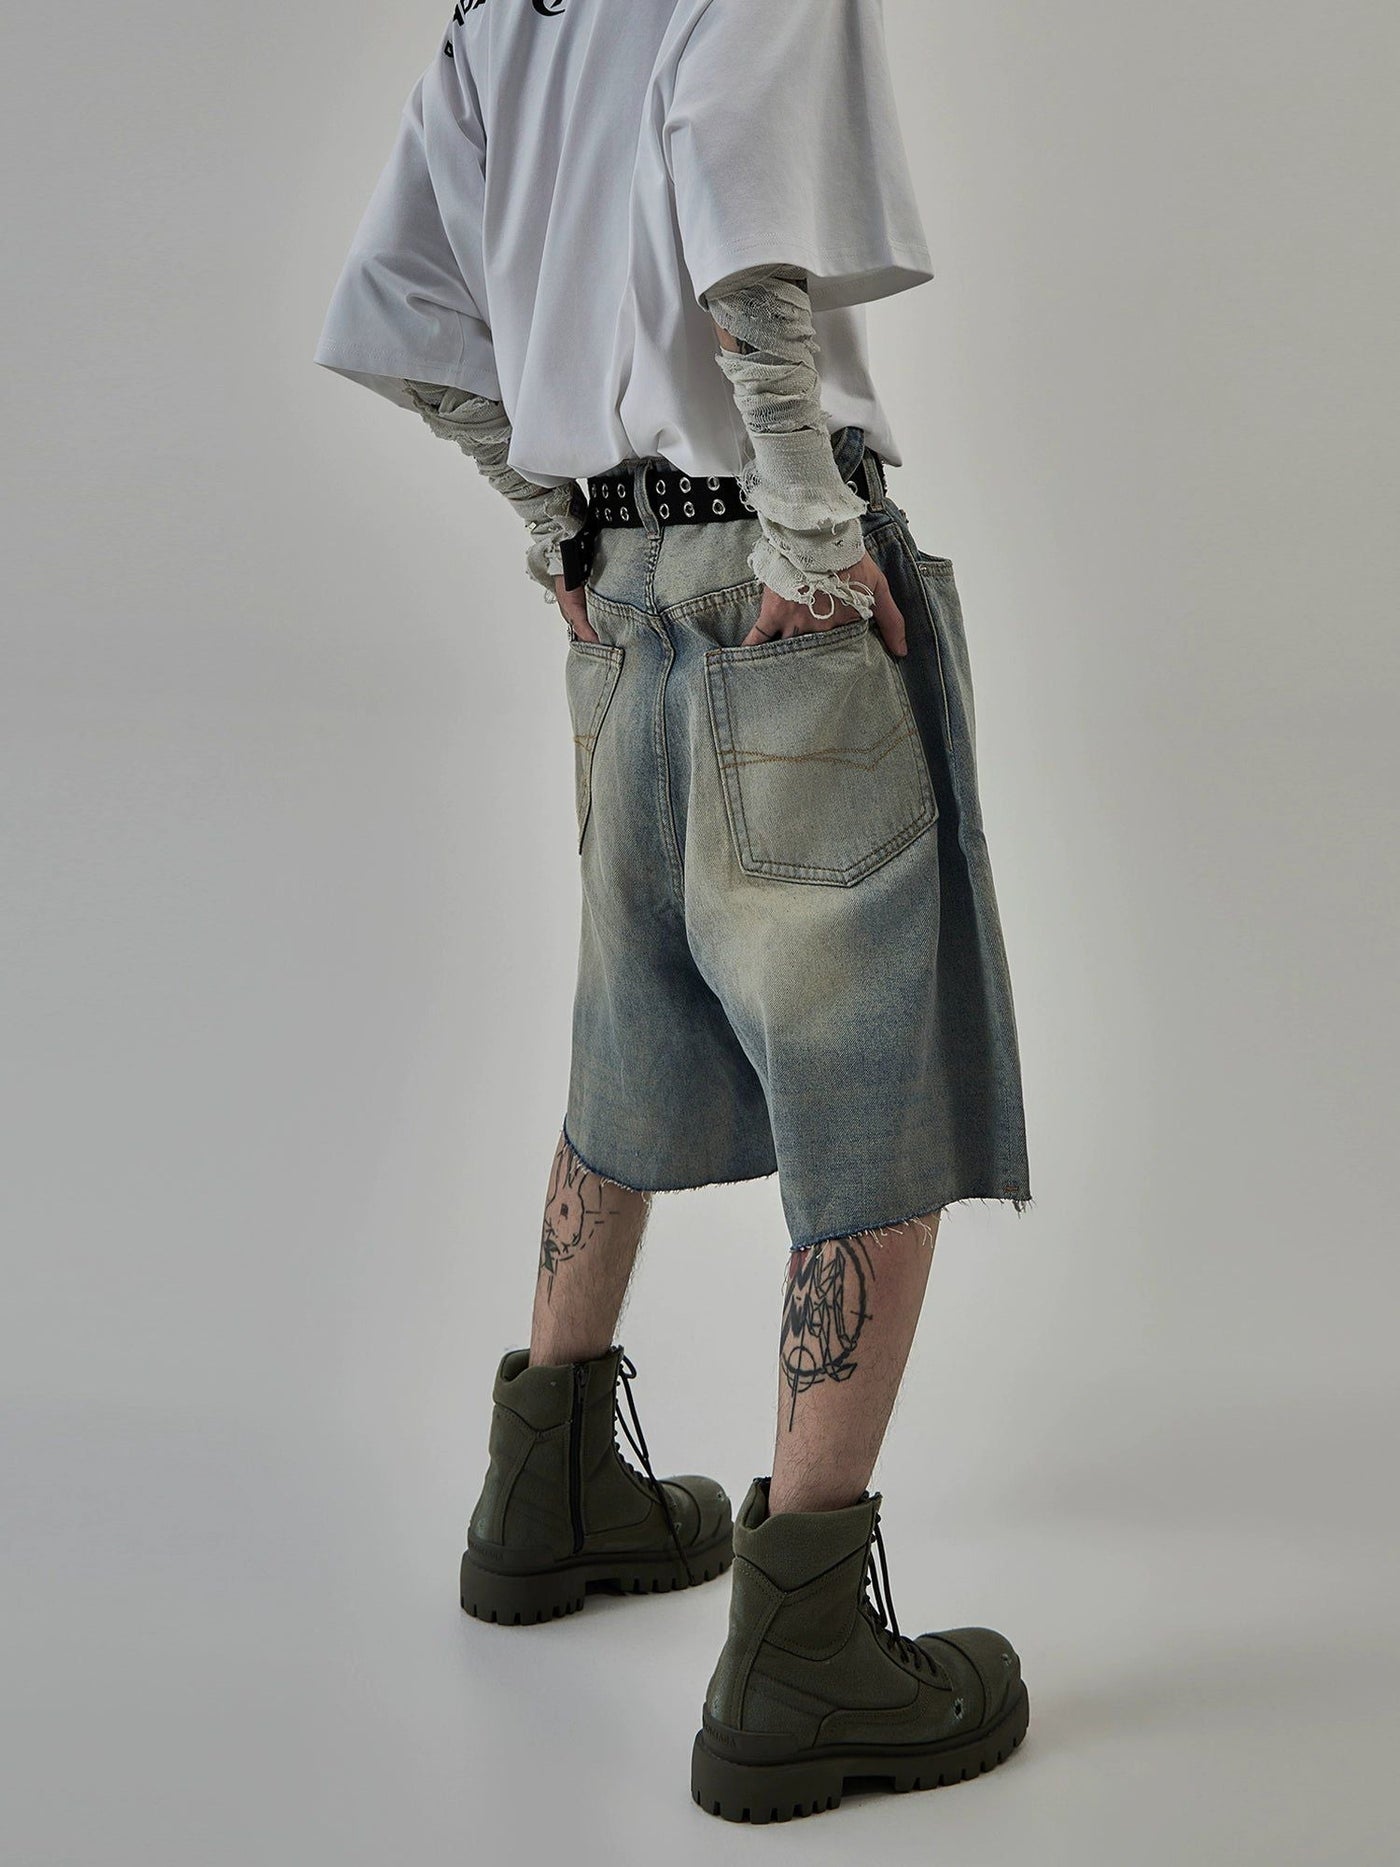 Washed Tassel Raw Edge Denim Shorts Korean Street Fashion Shorts By Ash Dark Shop Online at OH Vault